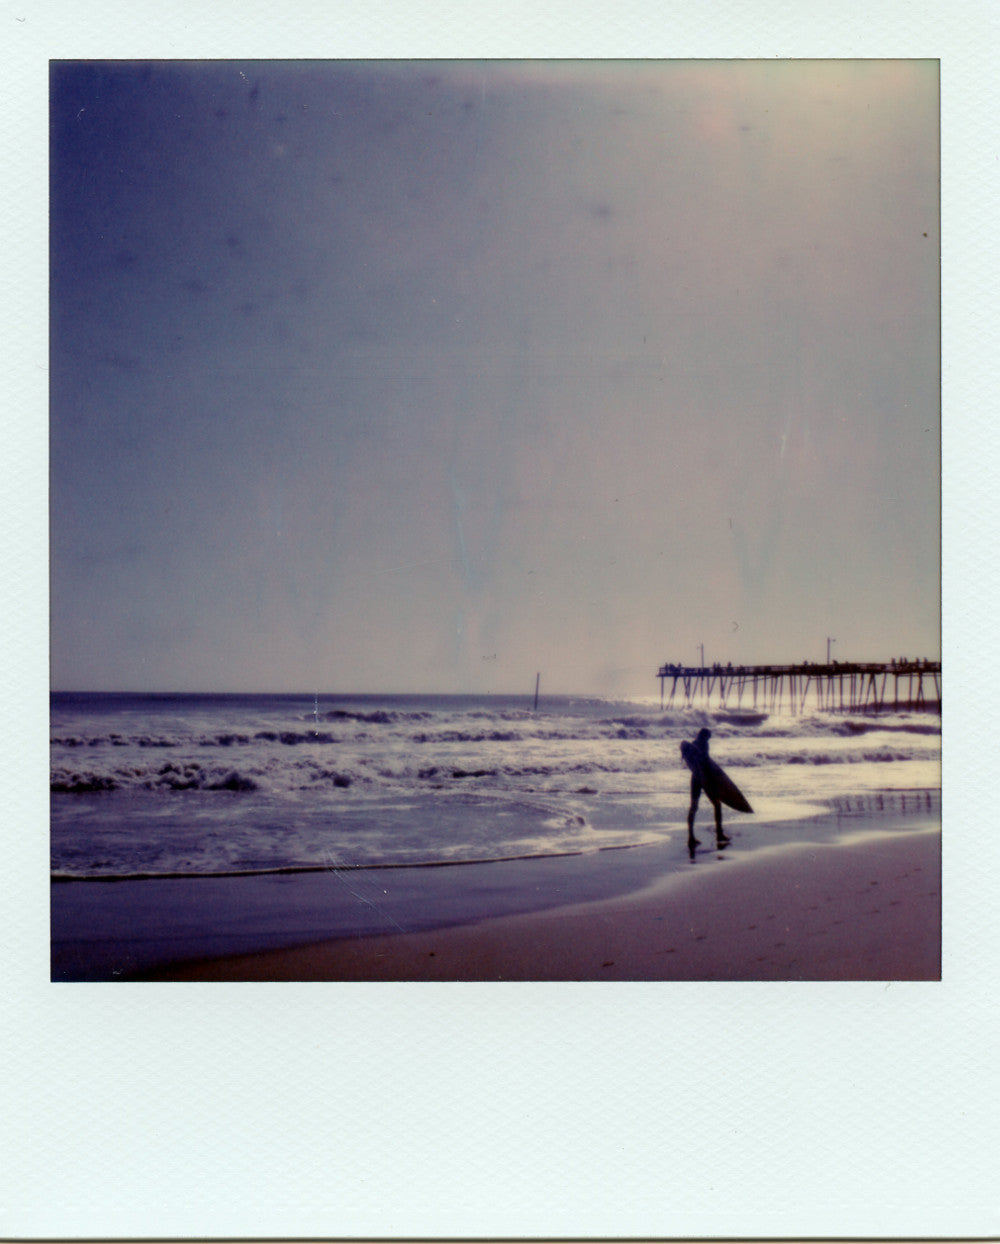 Surfer at Nags head pier shot on polaroid